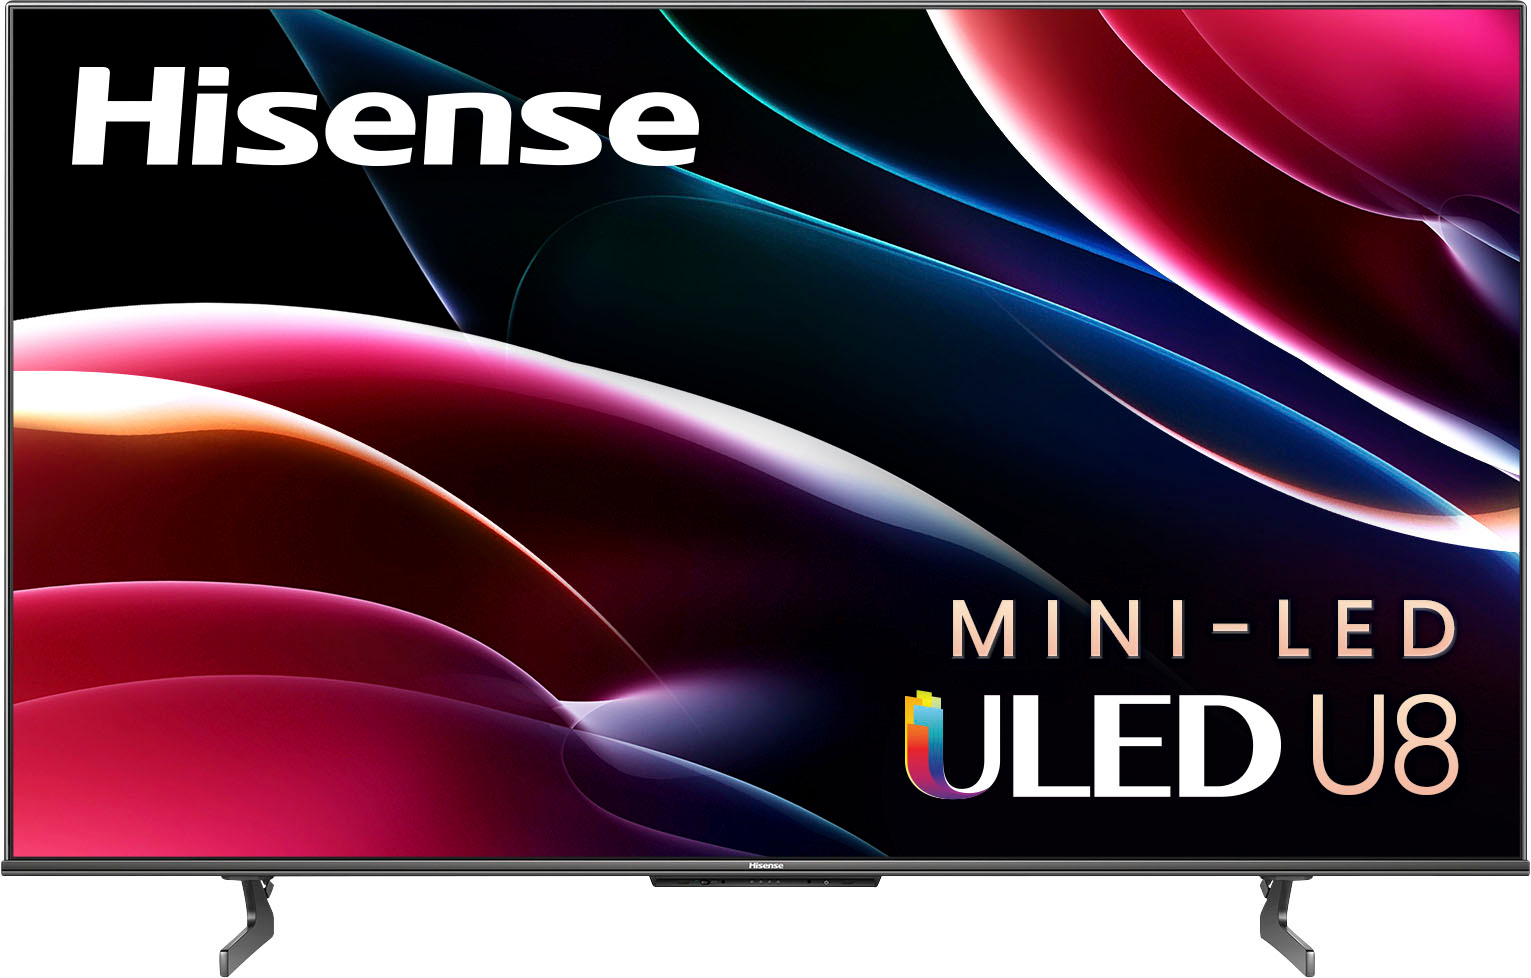 Hisense Class U8H Series Mini LED Quantum ULED 4K Smart TV 55U8H - Best